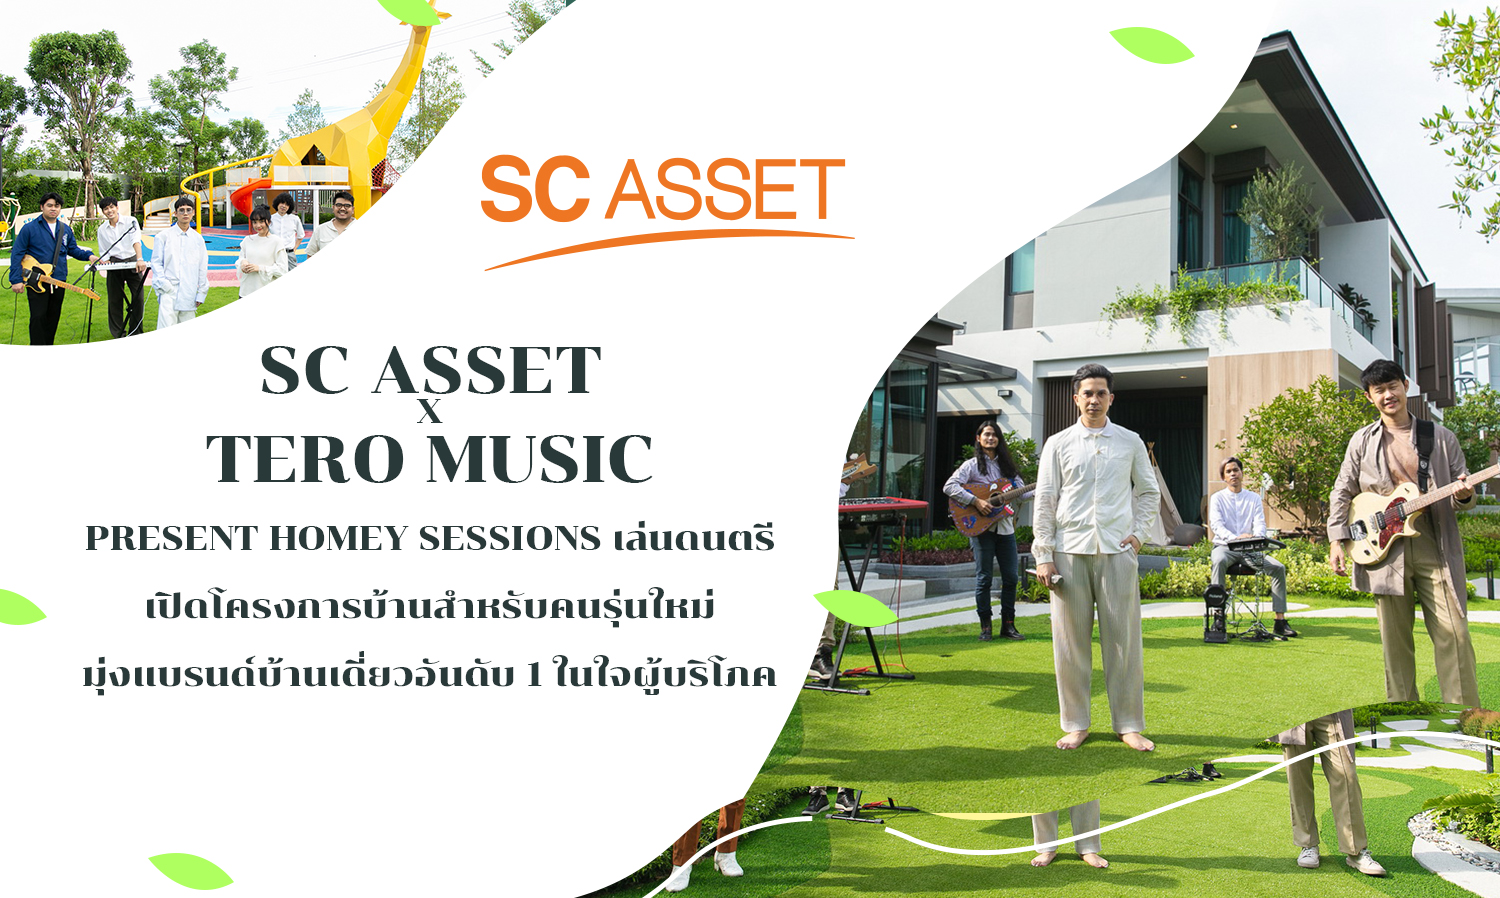 SC Asset x Tero Music Present Homey Sessions เล่นดนตรี เปิดโครงการบ้านสำหรับคนรุ่นใหม่ มุ่งแบรนด์บ้านเดี่ยวอันดับ 1 ในใจผู้บริโภค